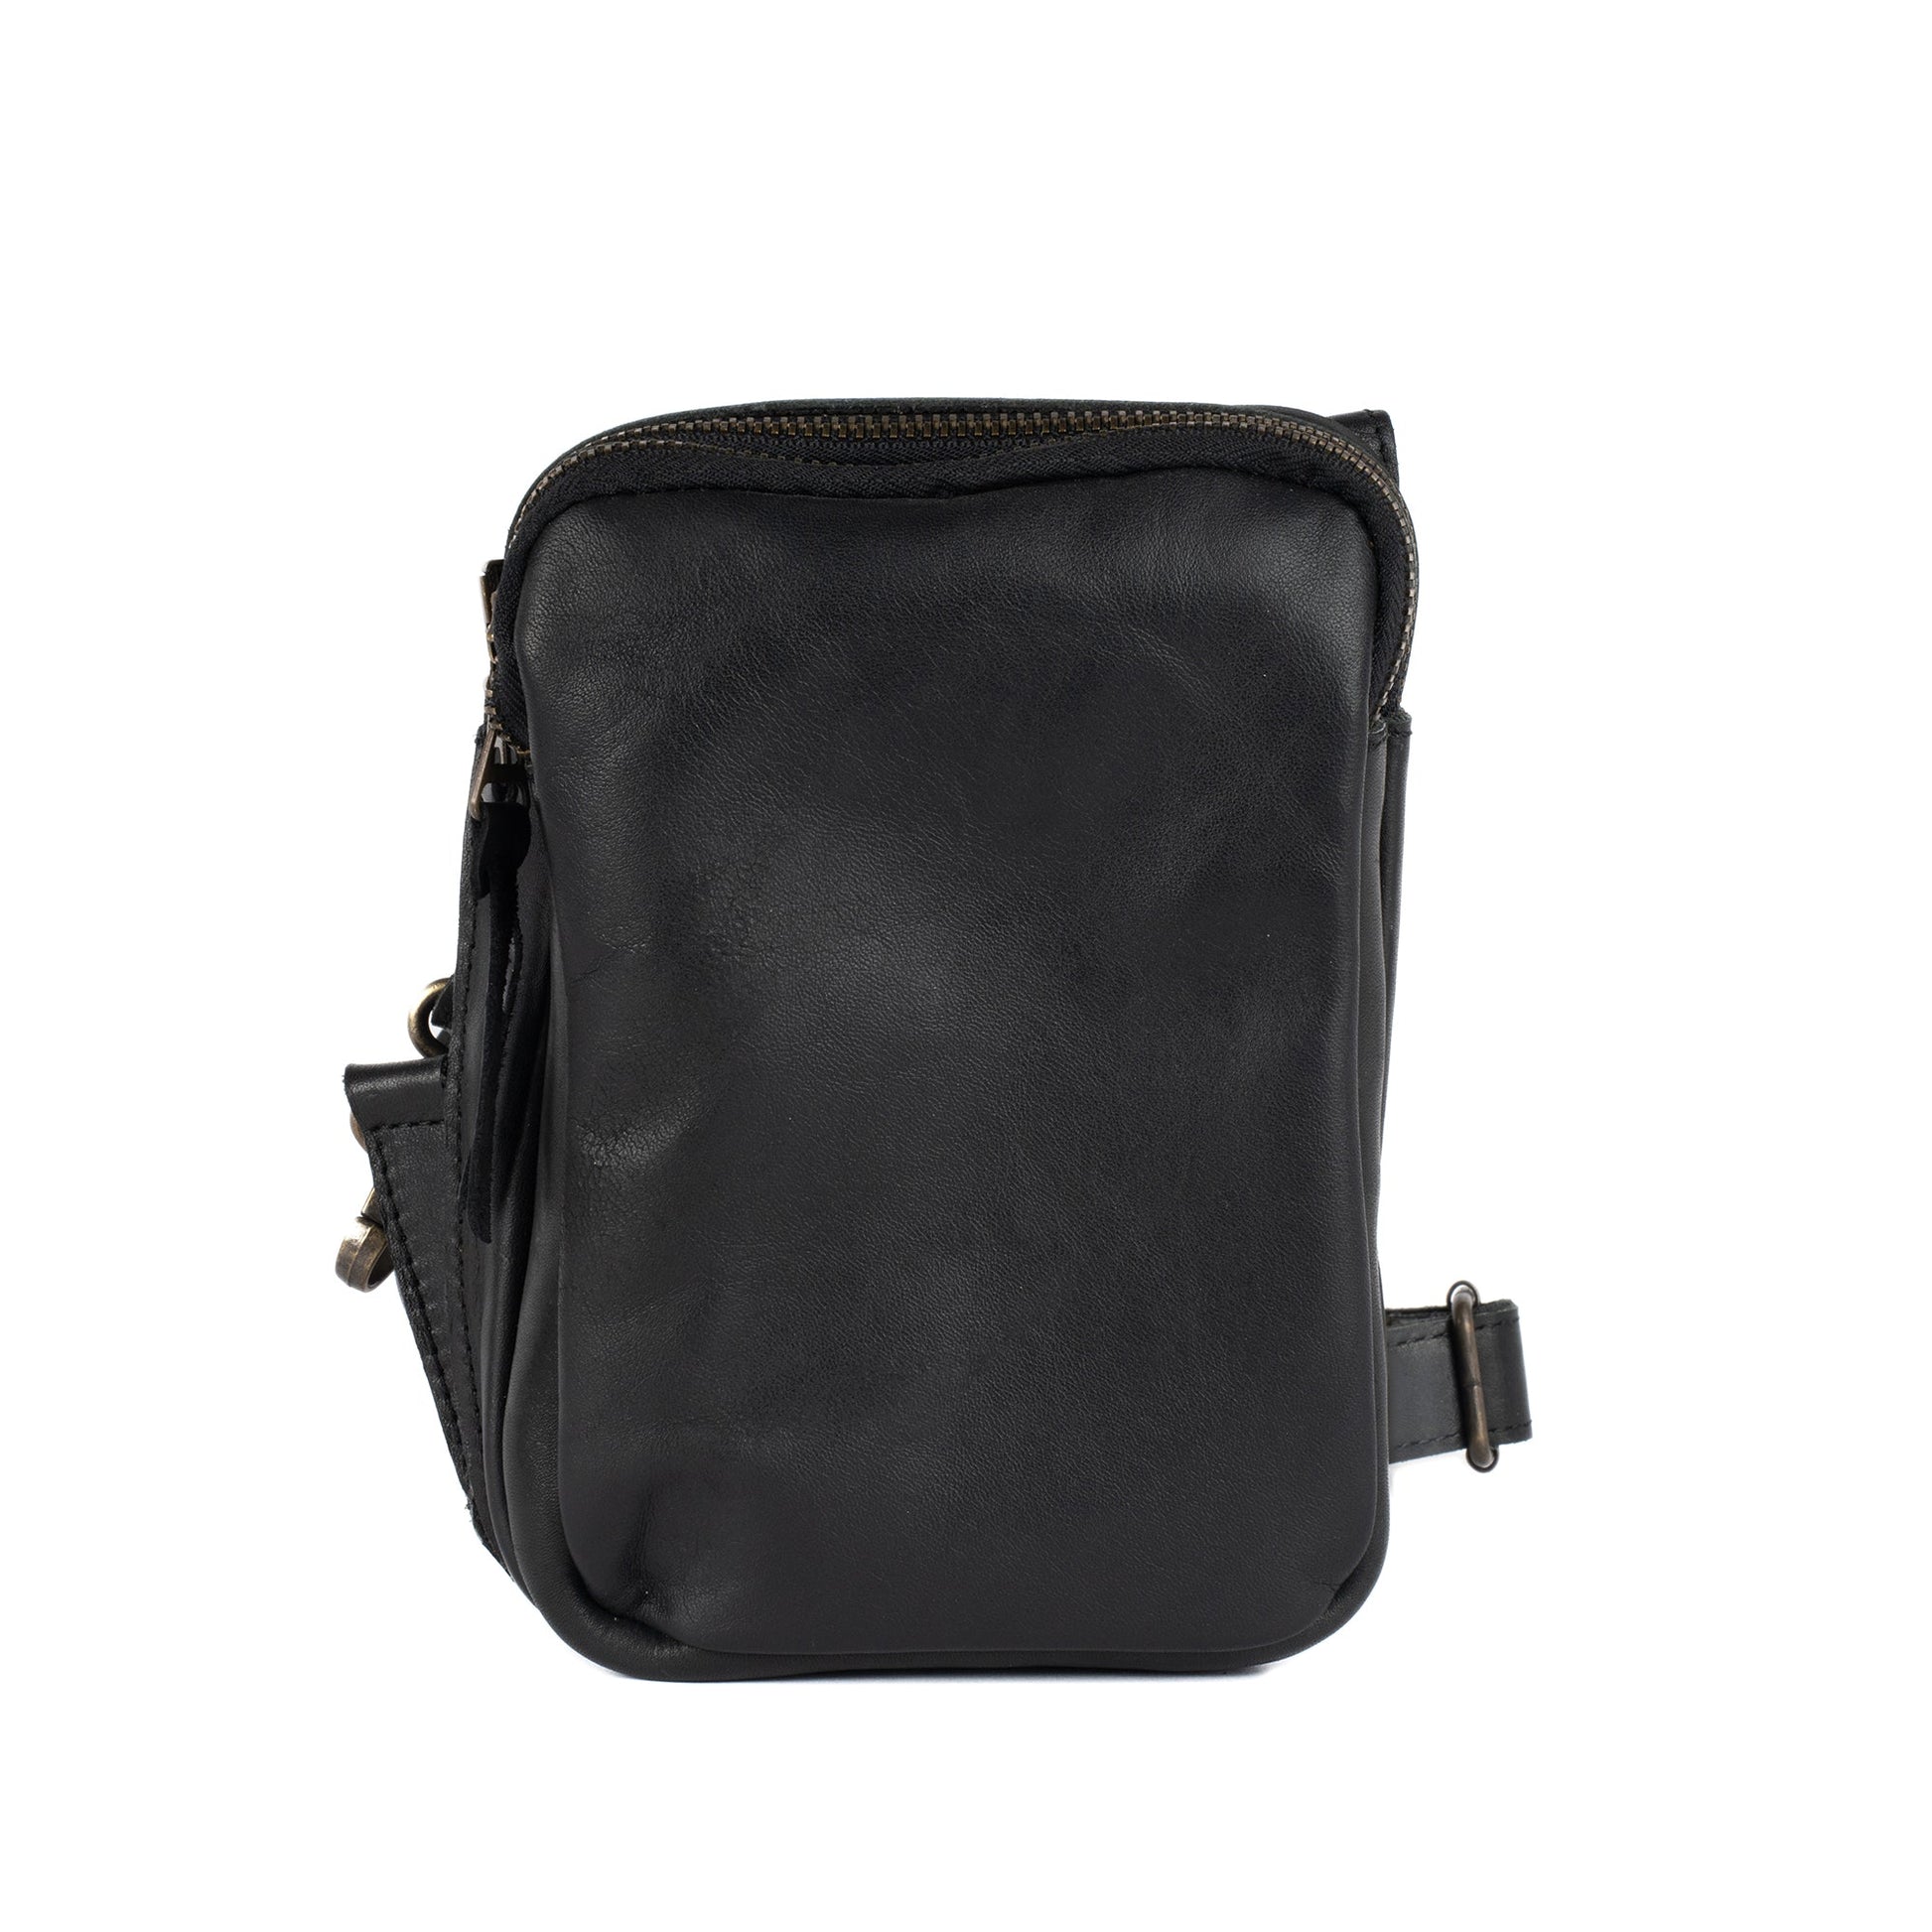 Sardis Leather Crossbody Bag - Black - Bags Zengoda Shop online from Artisan Brands